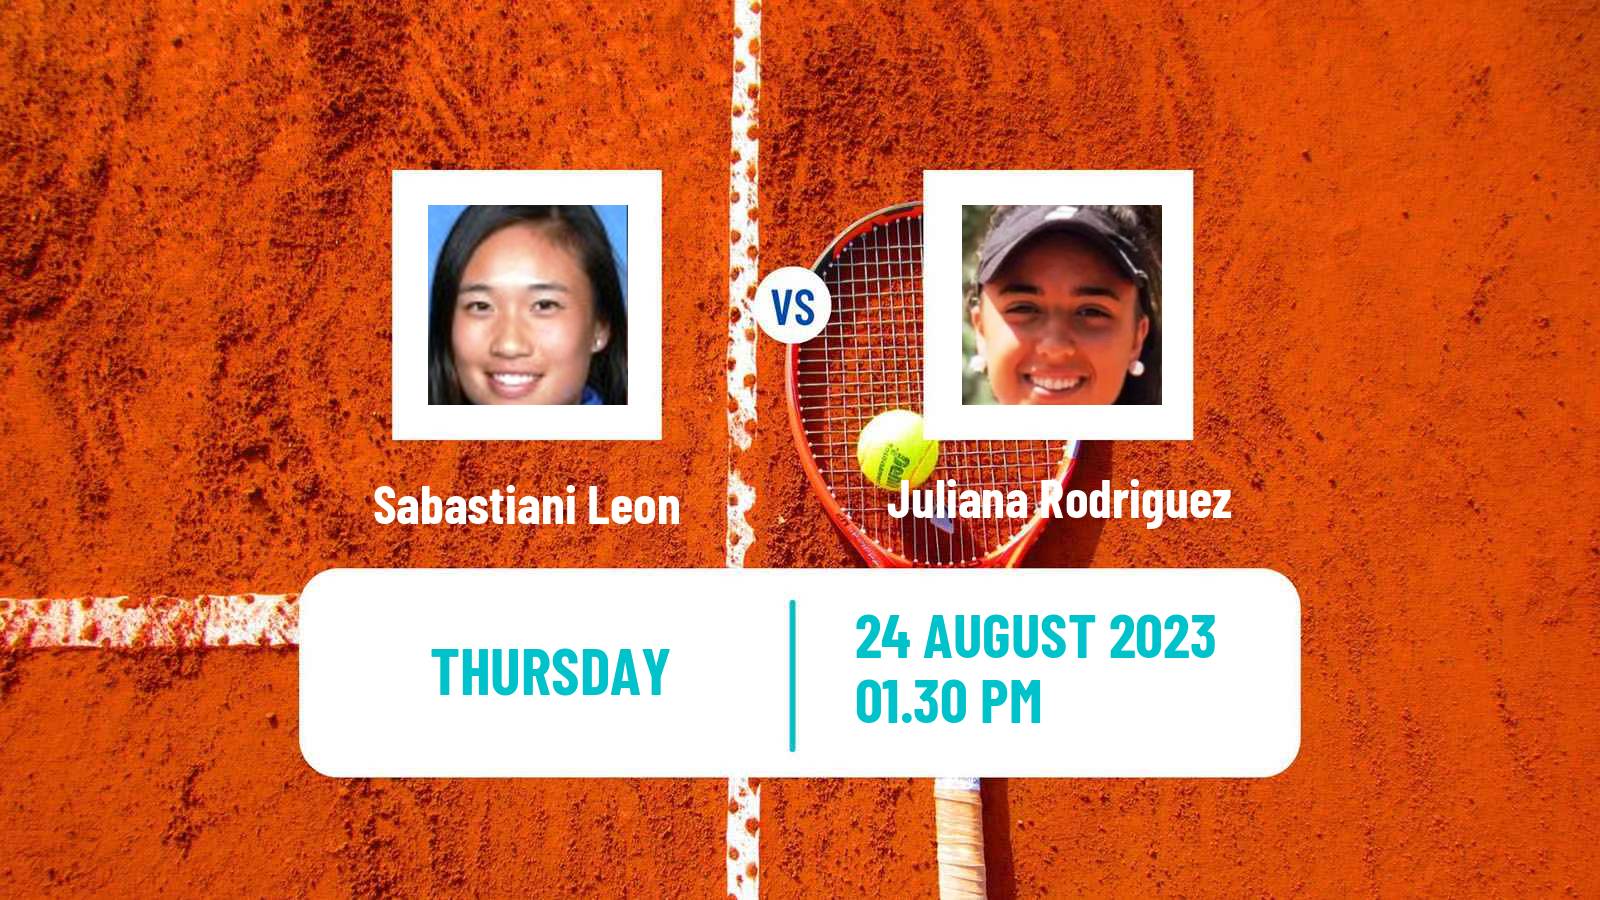 Tennis ITF W15 Lima Women Sabastiani Leon - Juliana Rodriguez